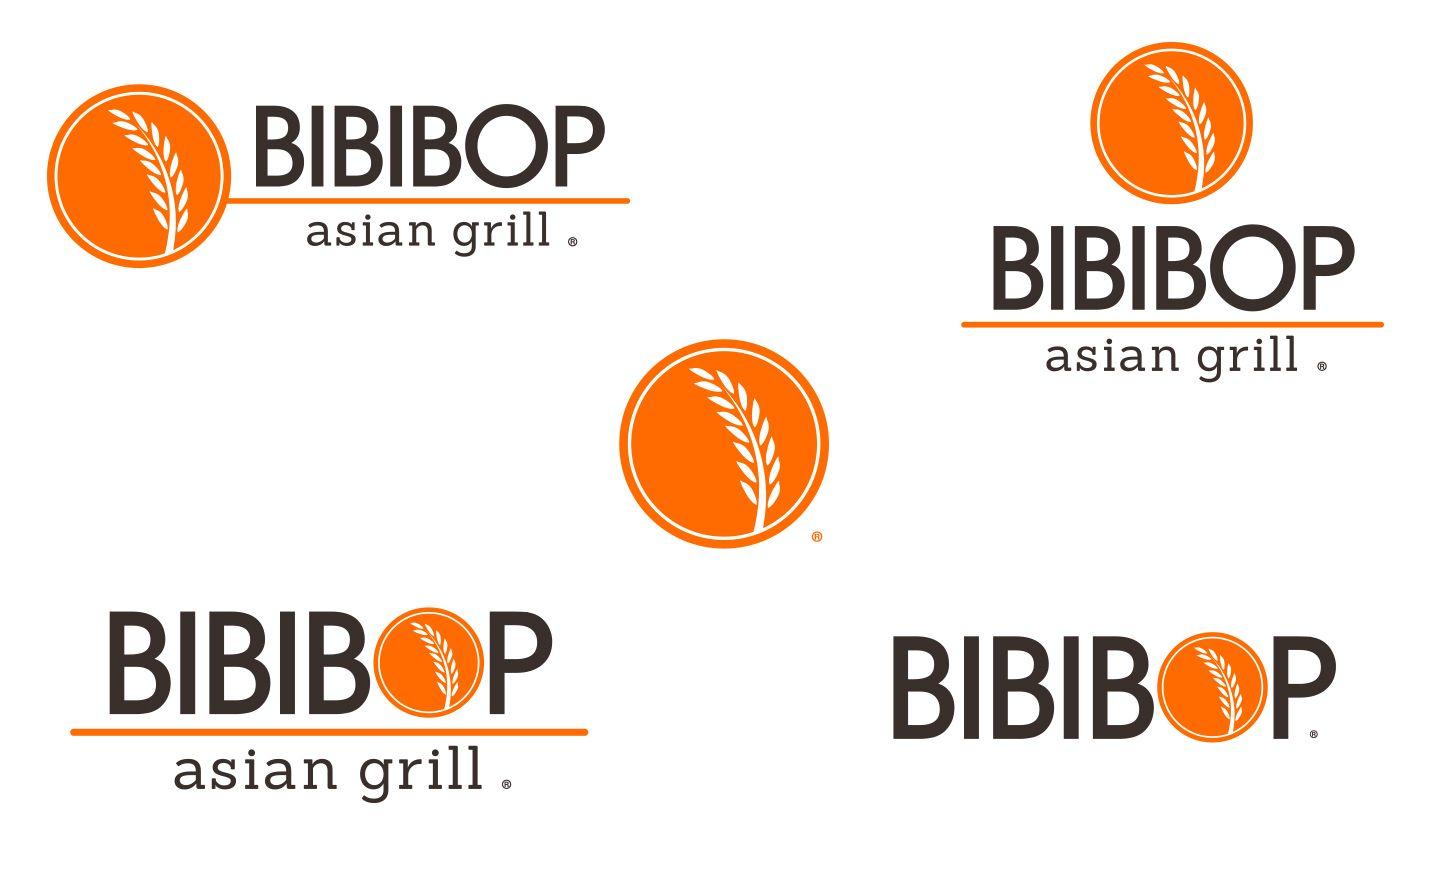 Bibibop Logo - Bibibop Asian Grill | Cody Holland Creative